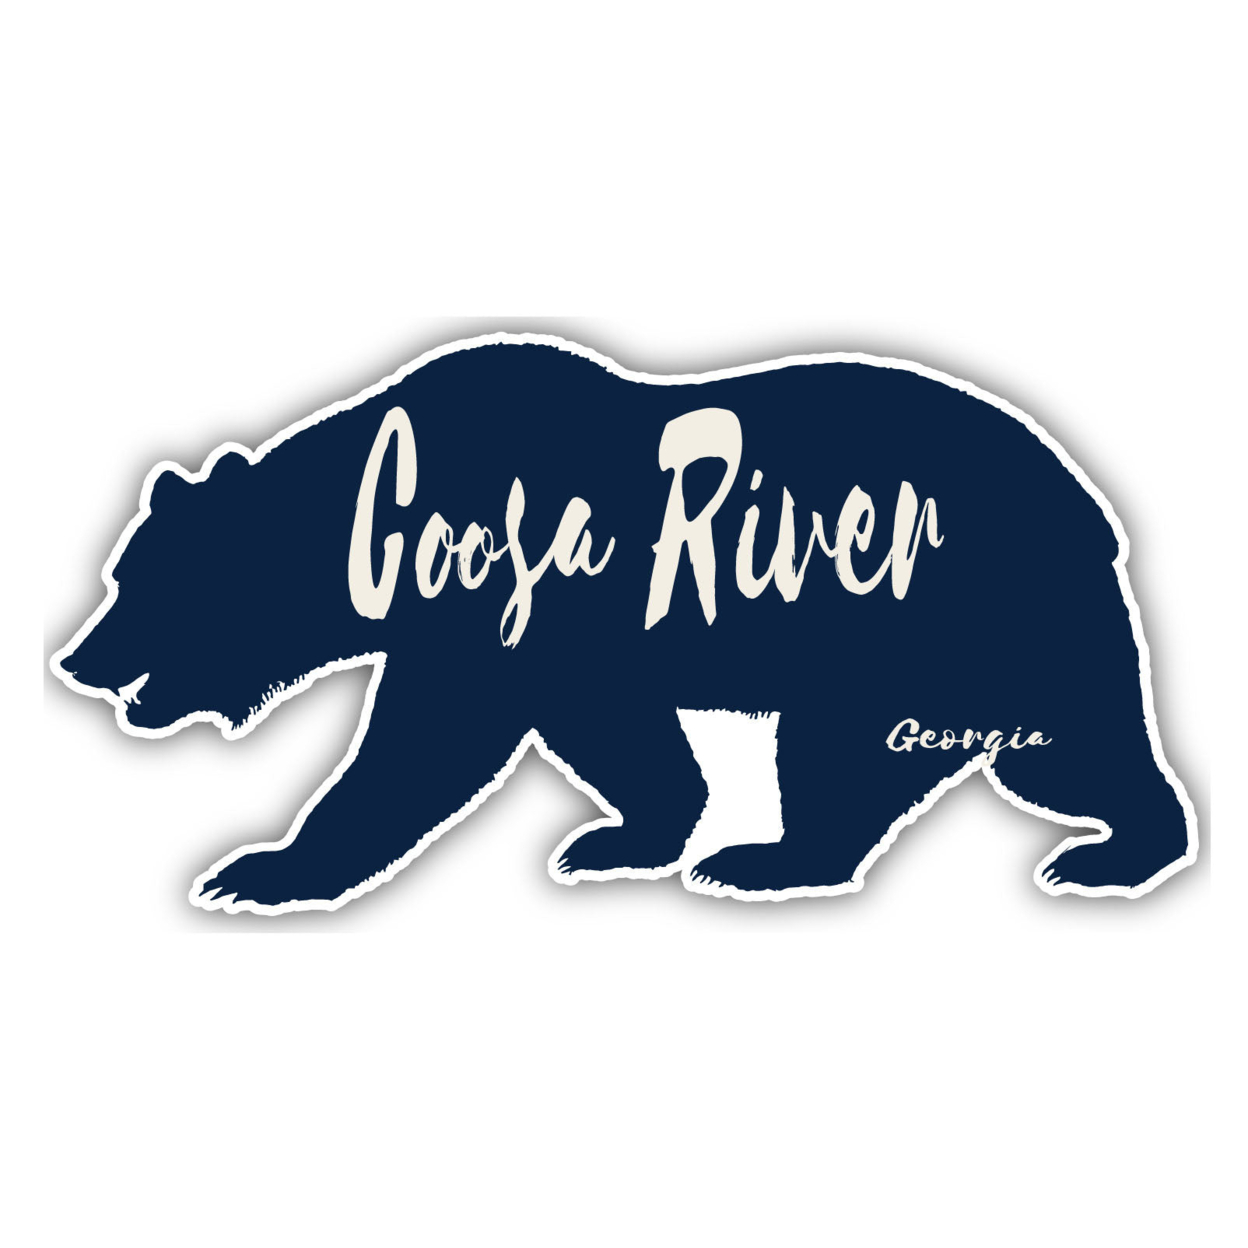 Coosa River Georgia Souvenir Decorative Stickers (Choose Theme And Size) - Single Unit, 10-Inch, Bear